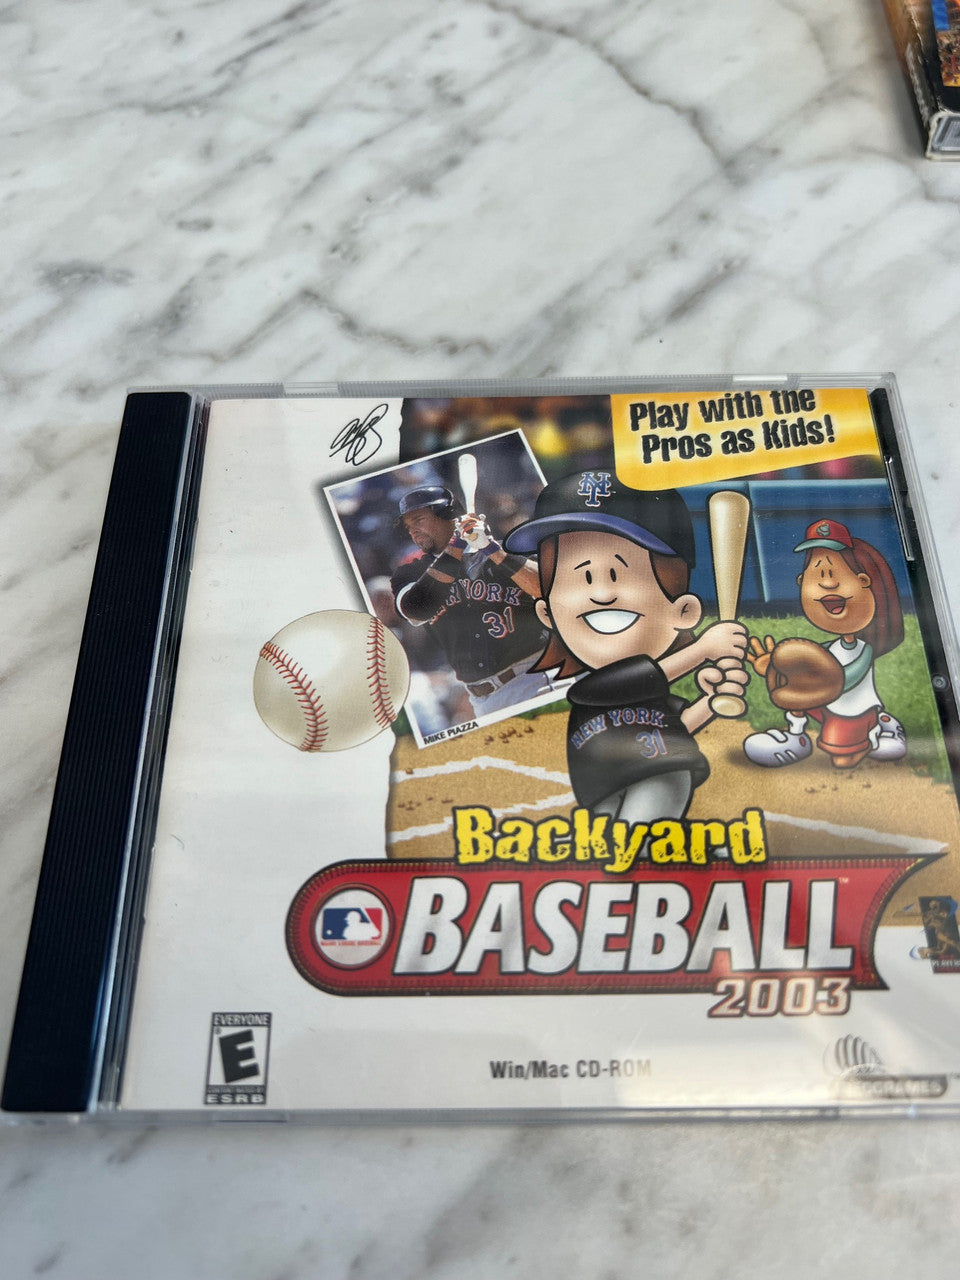 Vintage Backyard Baseball 2003 PC CD ROM Game Win/Mac Mike Piazza Cover